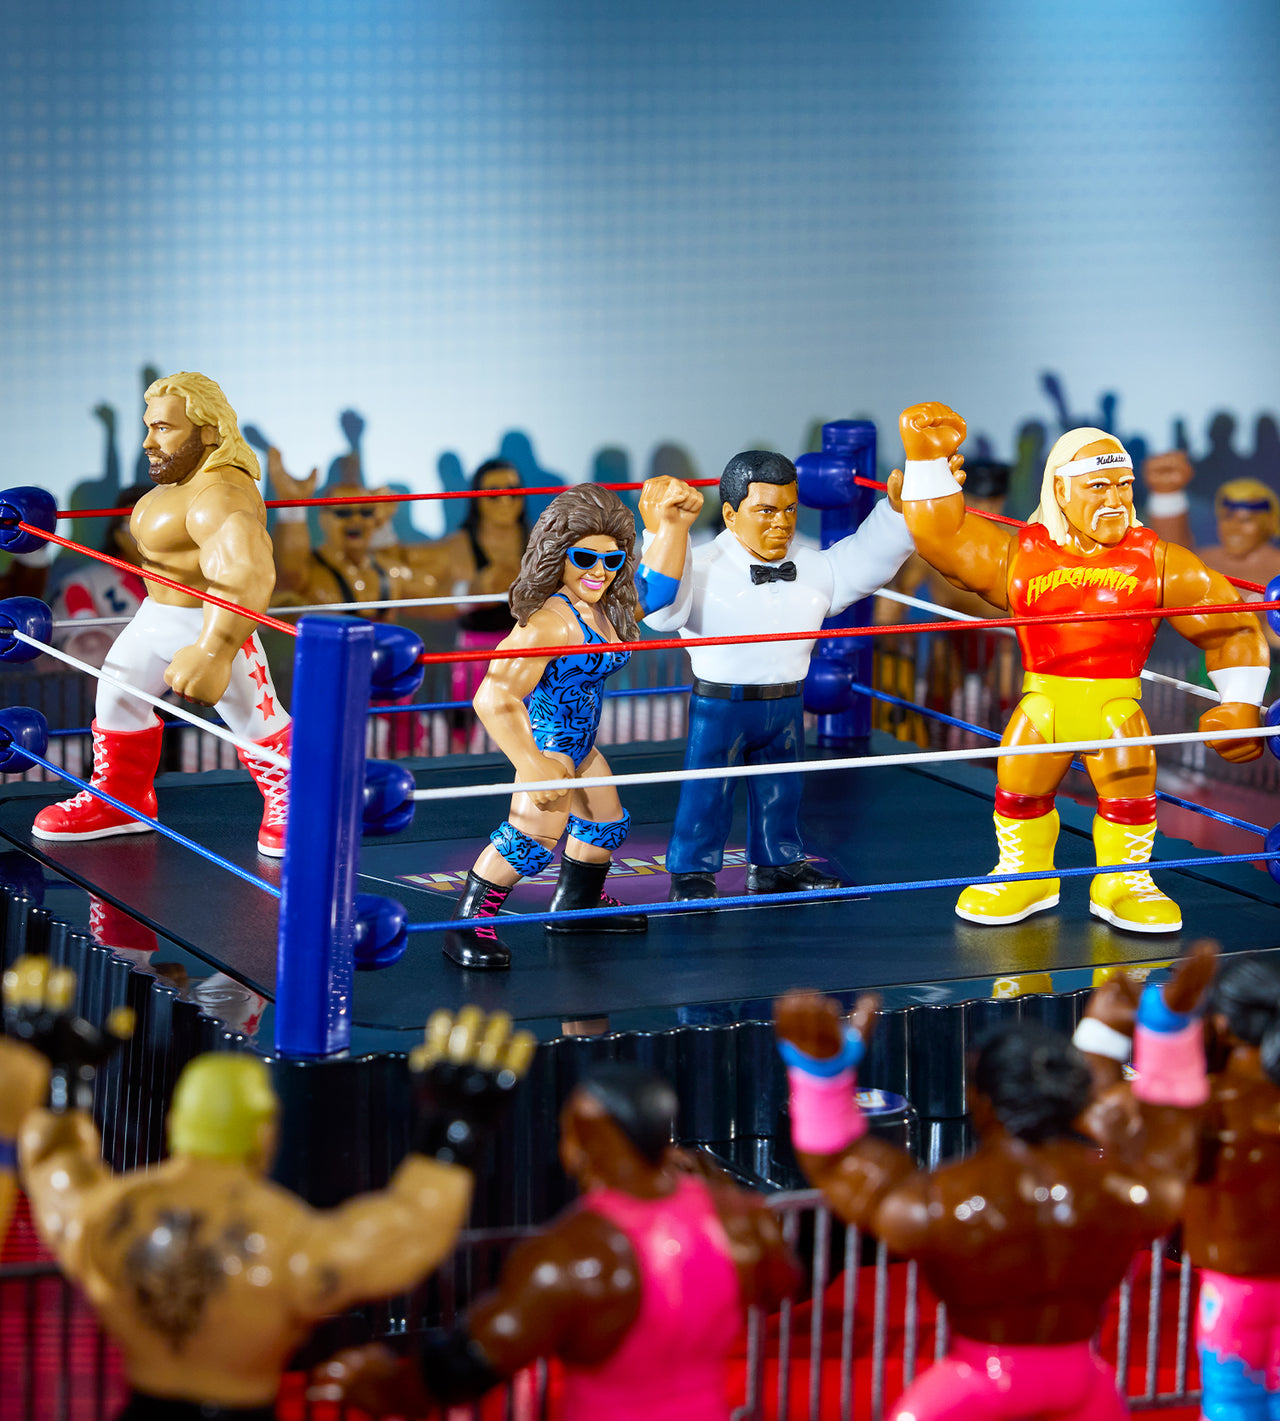 Roman Reigns & Logan Paul - WWE Showdown 2-Packs 15 WWE Toy Wrestling  Action Figures by Mattel!